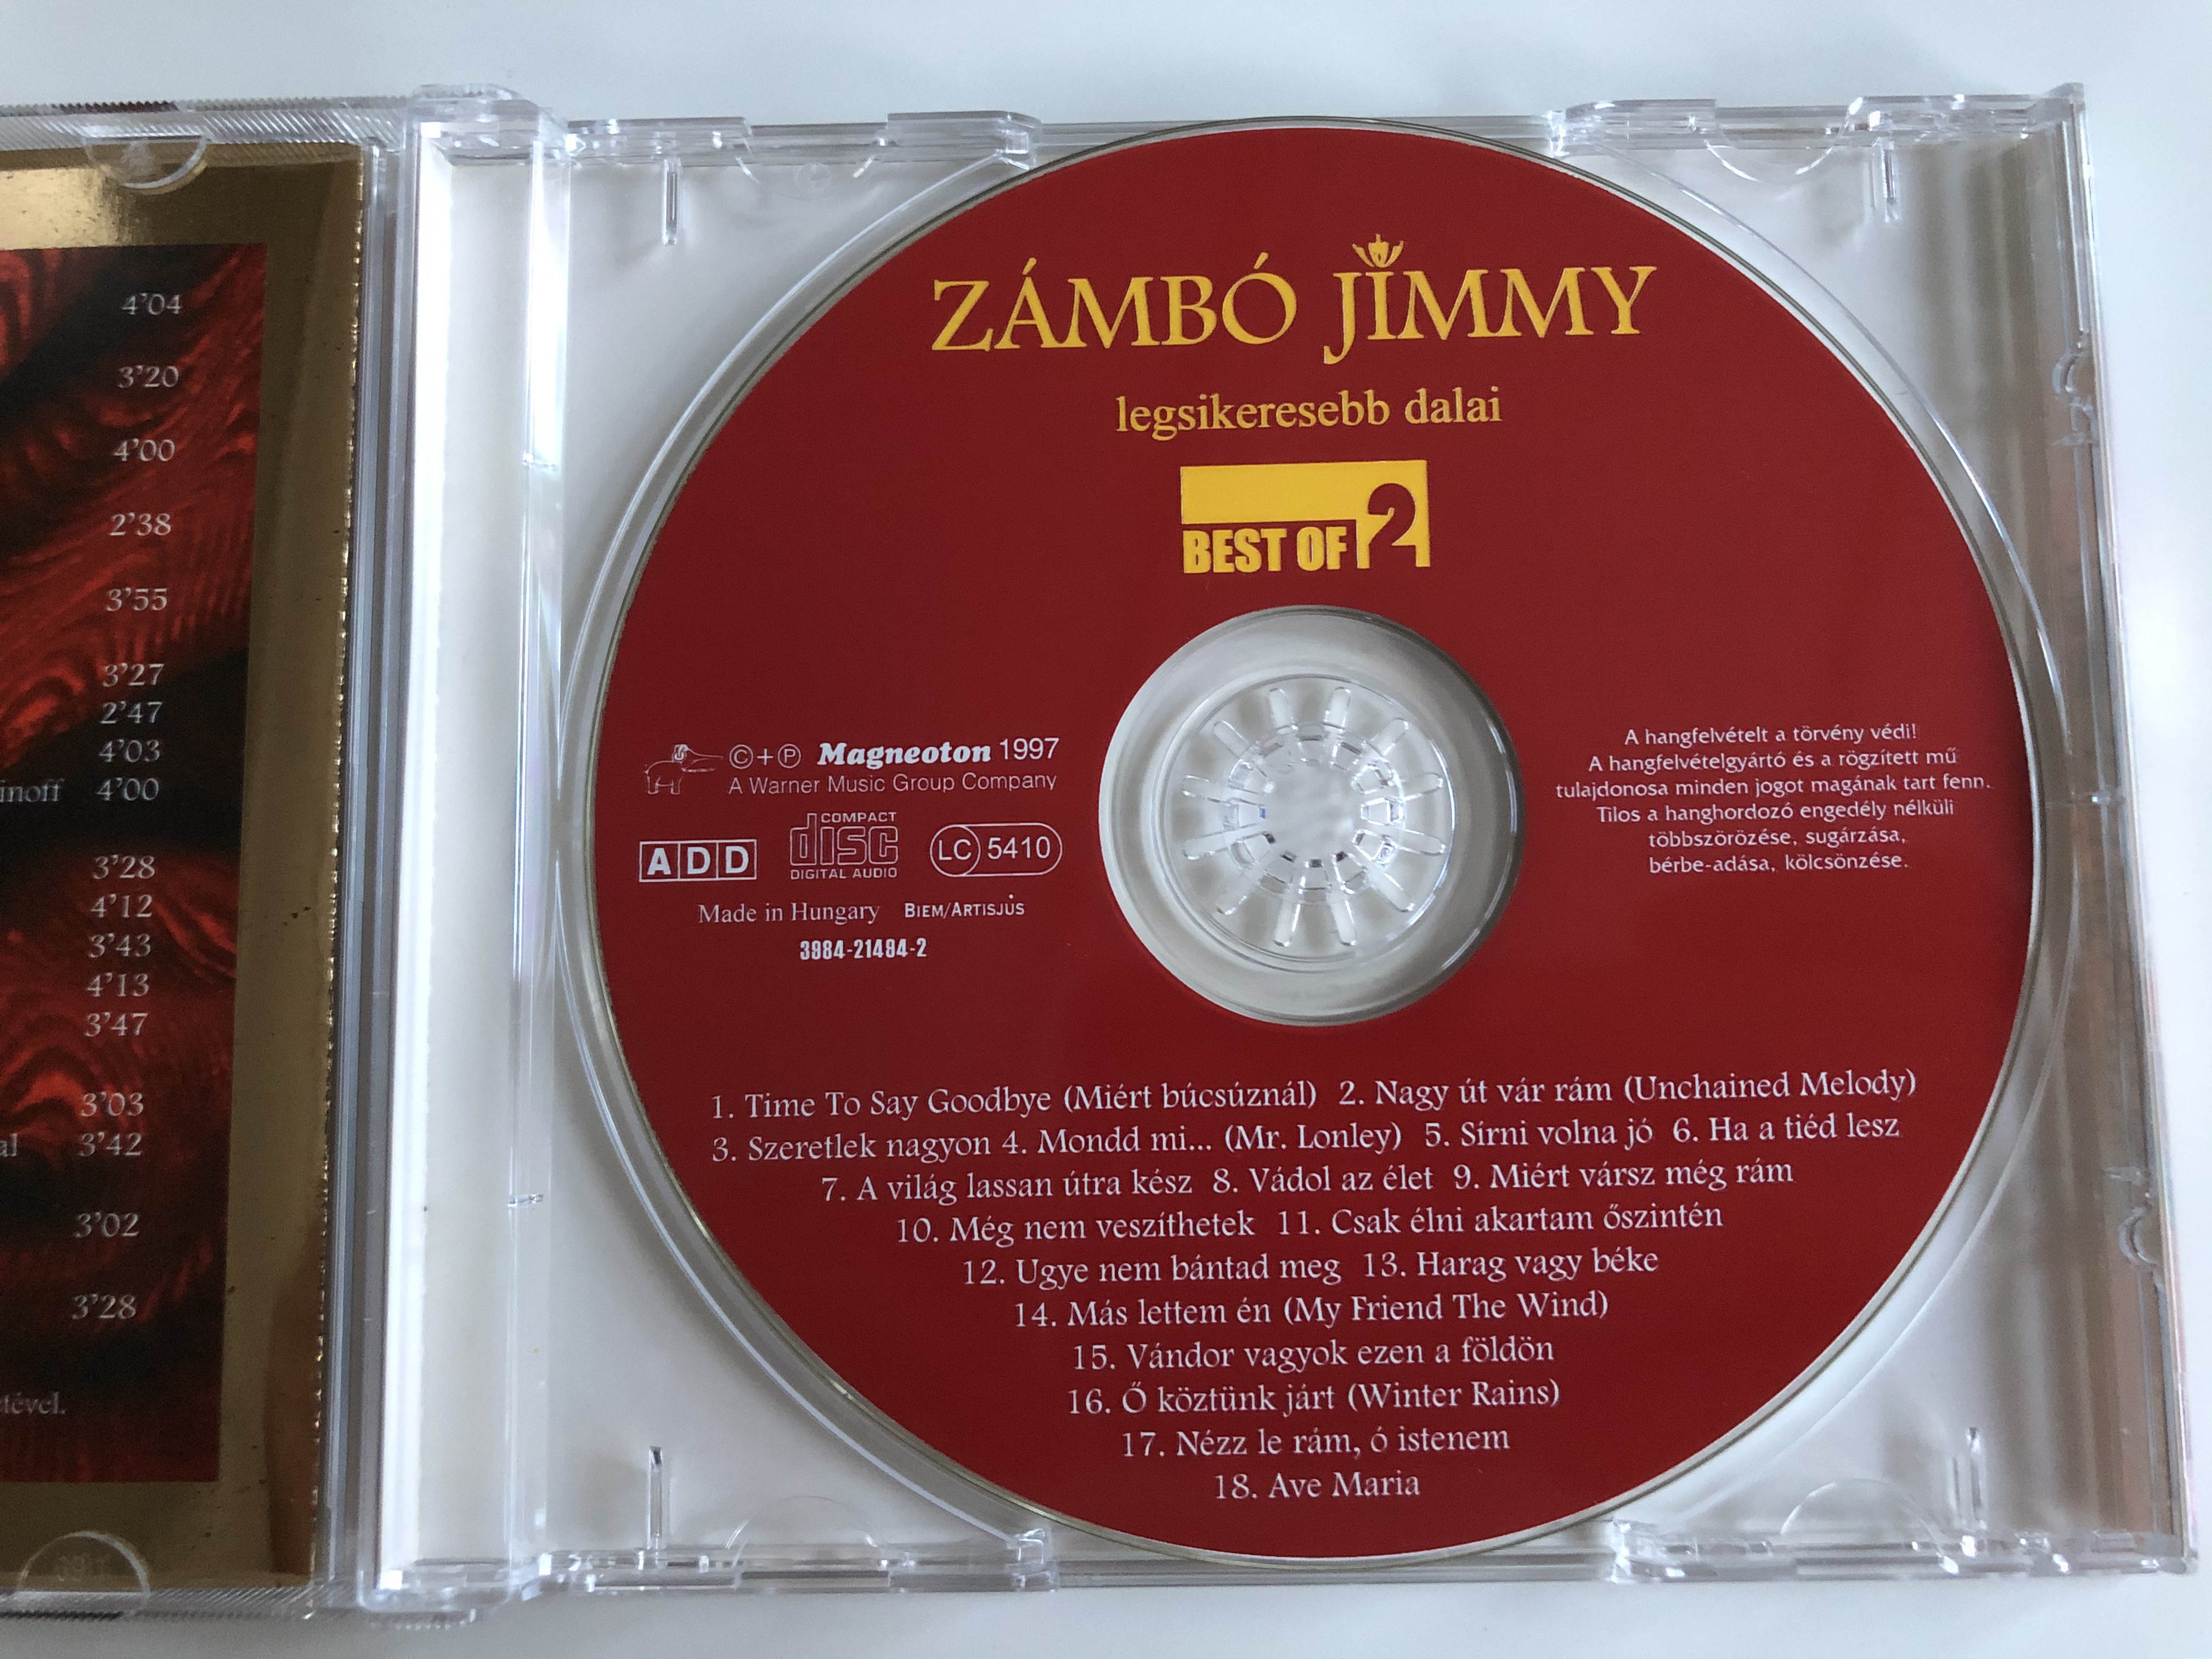 z-mb-jimmy-best-of-2-magneoton-audio-cd-1997-3984-21484-4-6-.jpg